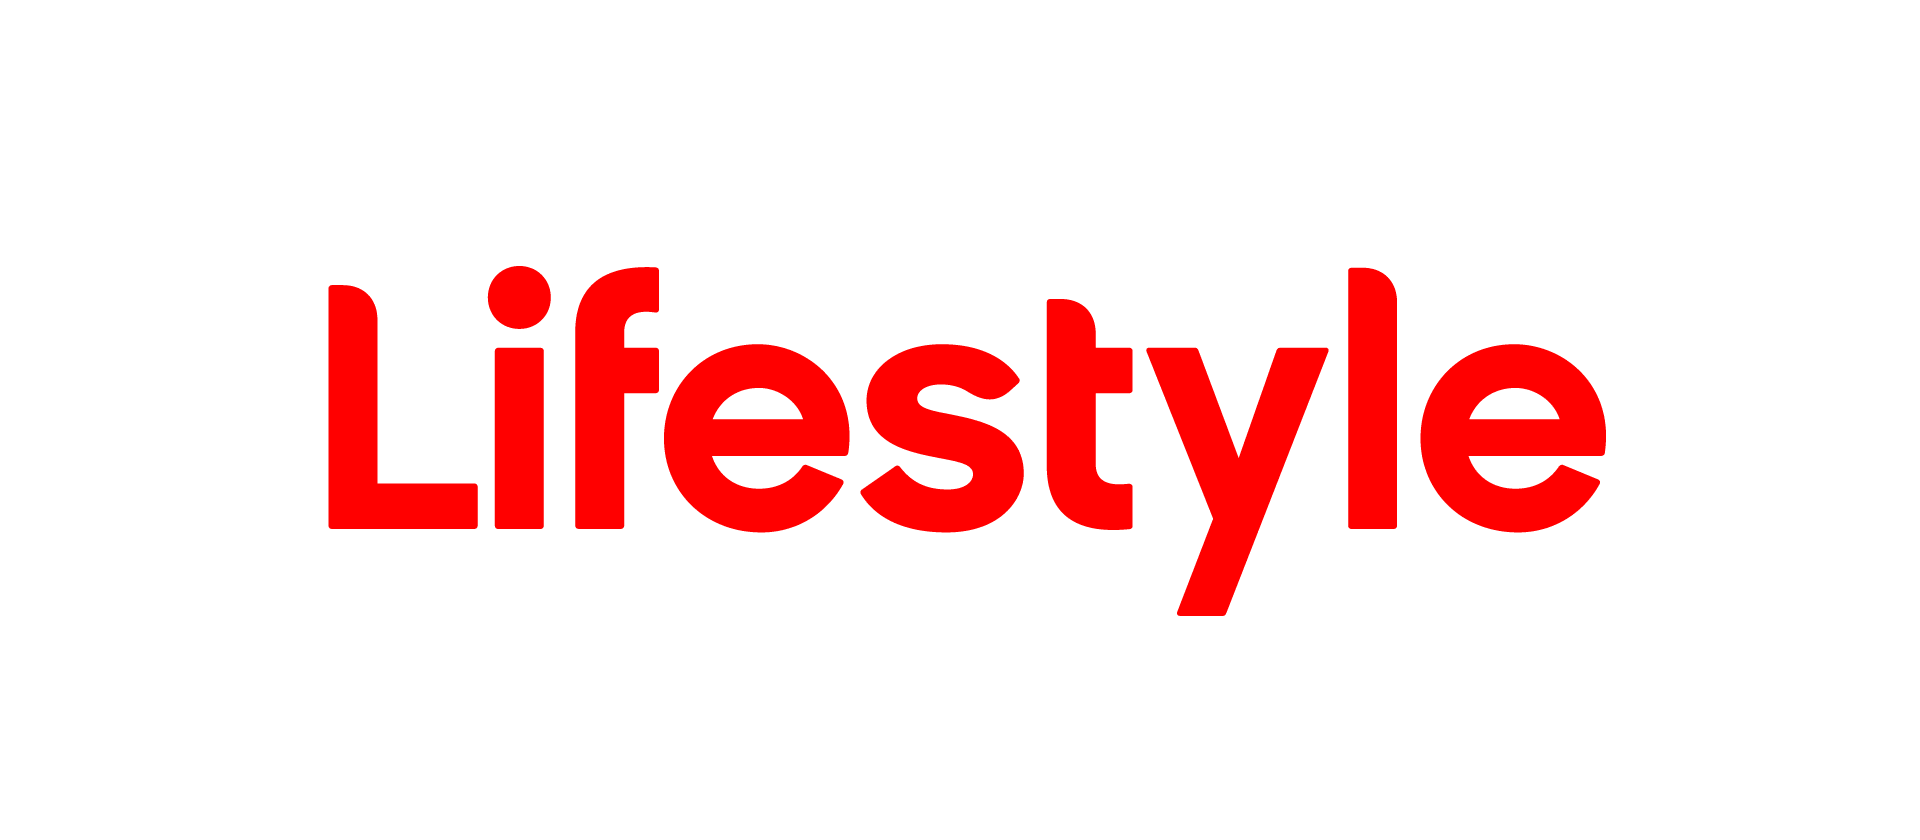 Custom Fonts: Lifestyle